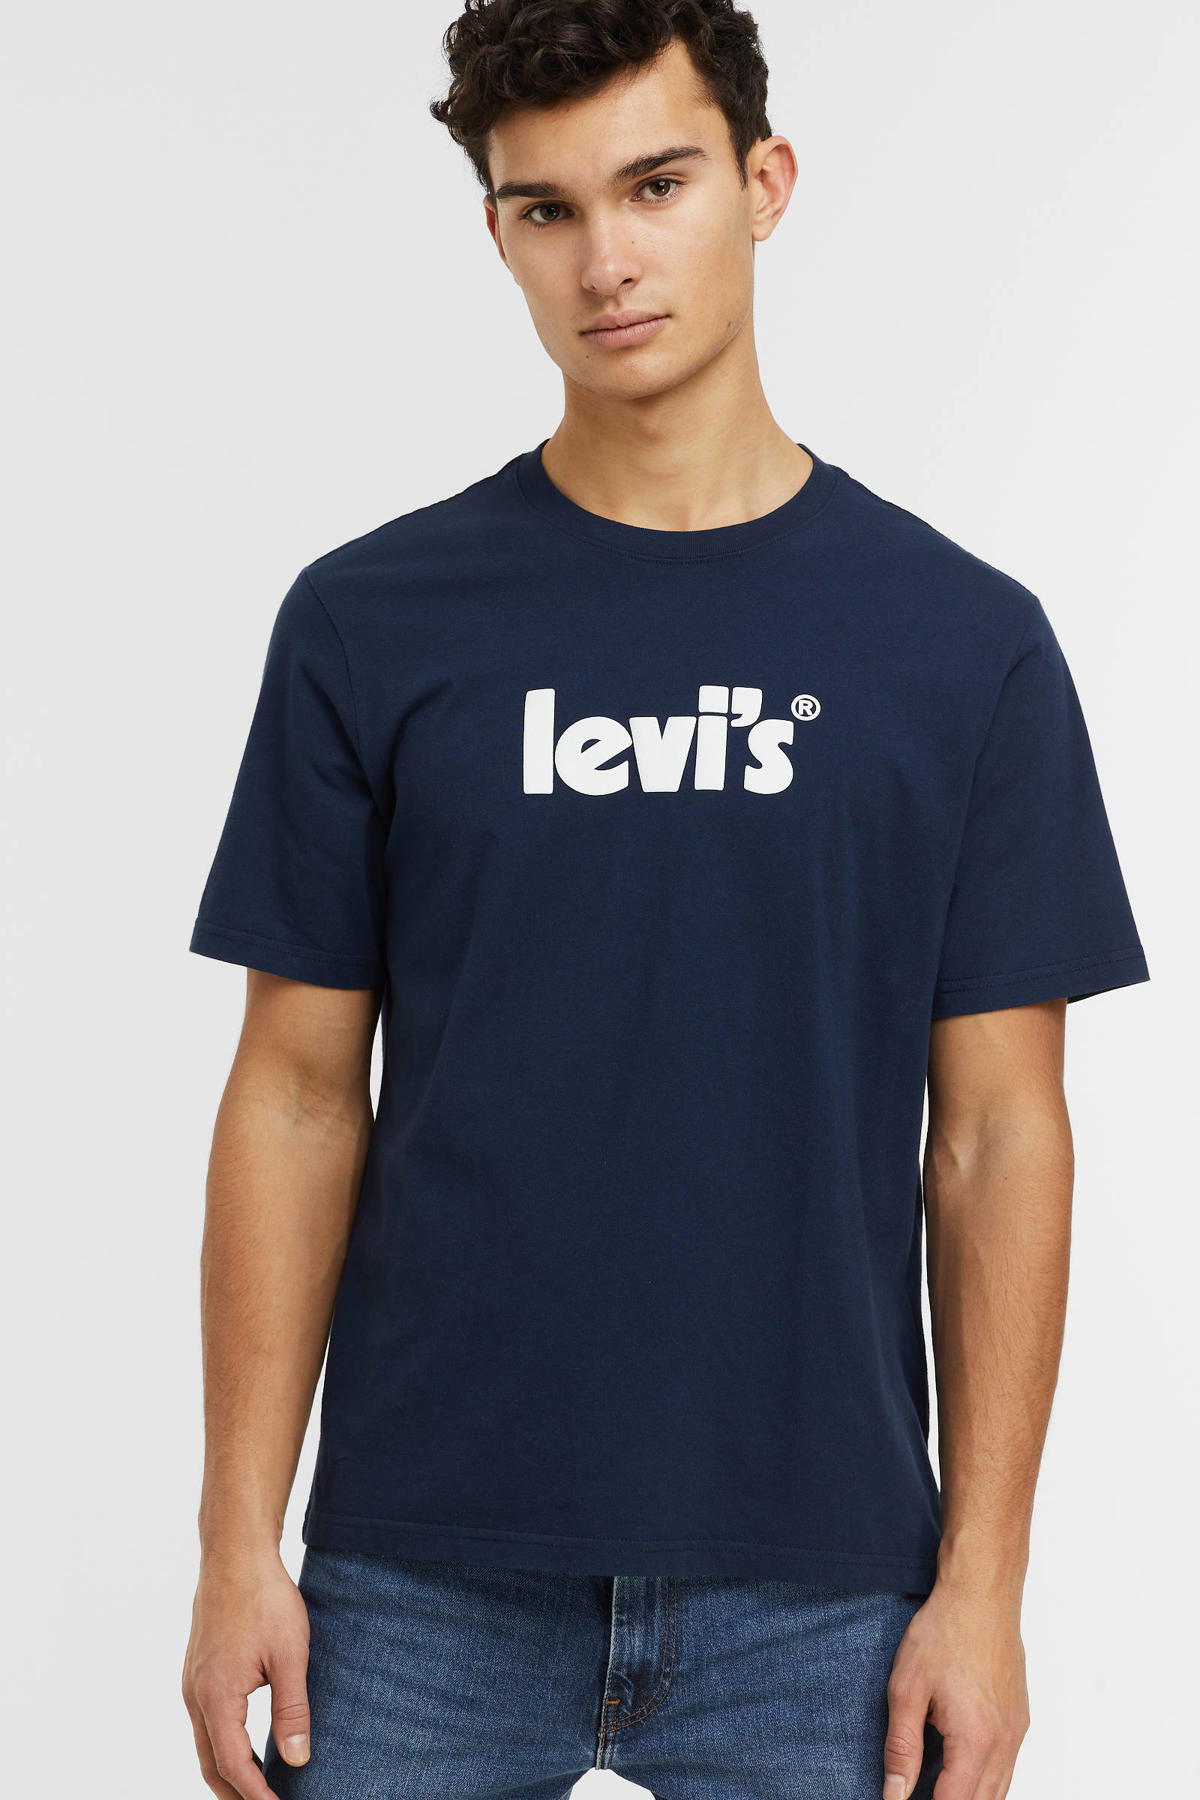 bouwer Knuppel Antagonist Levi's T-shirt met logo dress blue | wehkamp